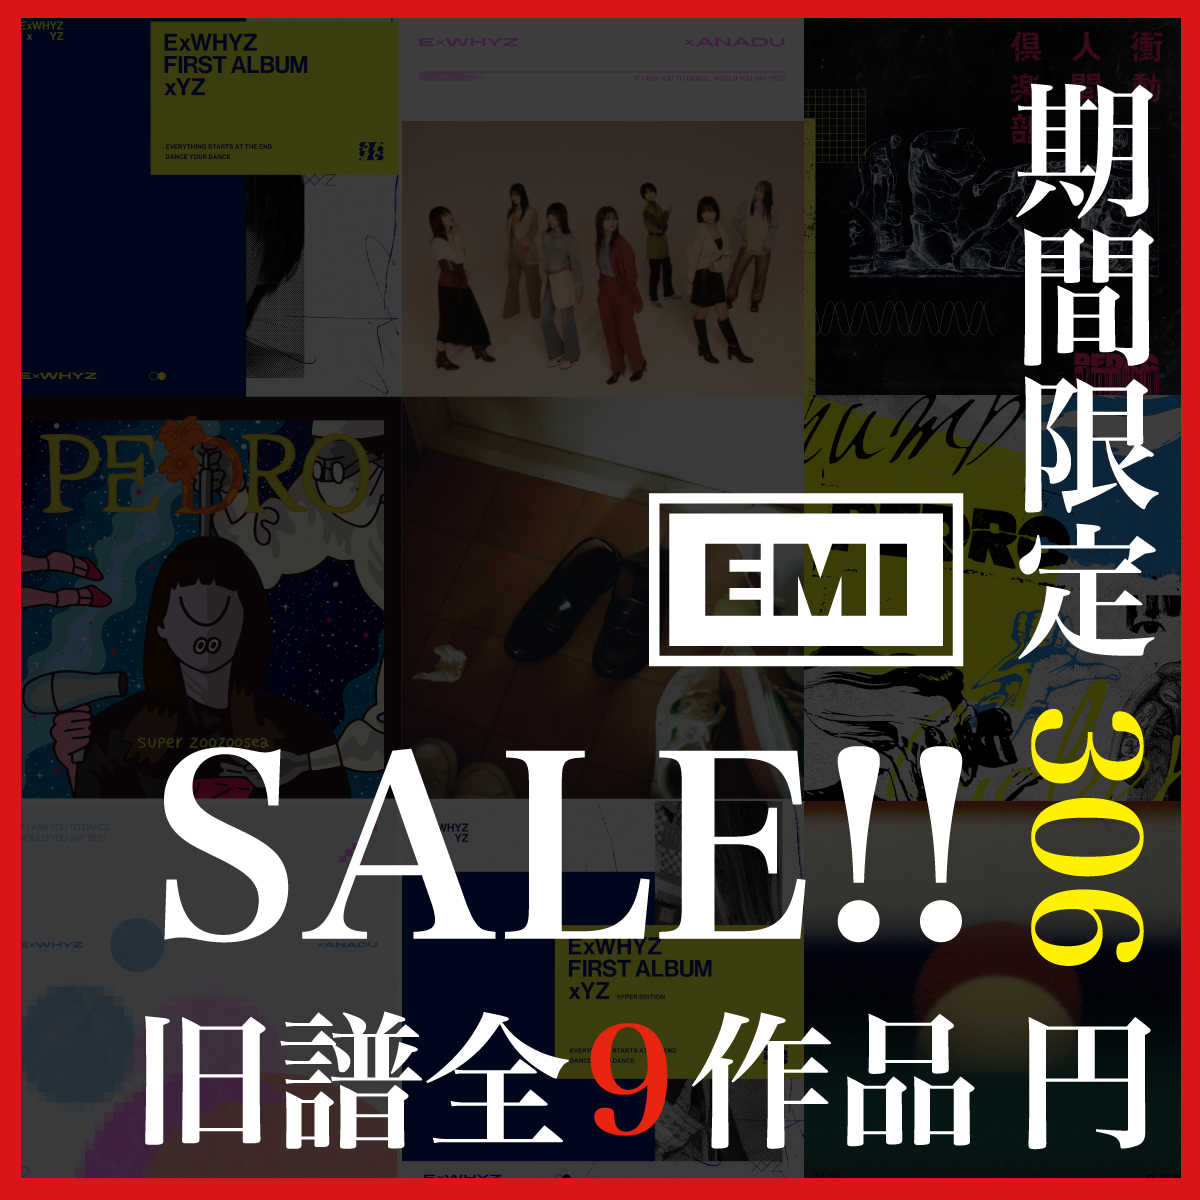 EMI】PEDRO & ExWHYZ期間限定で全アルバム306円配信!!｜ ExWHYZ